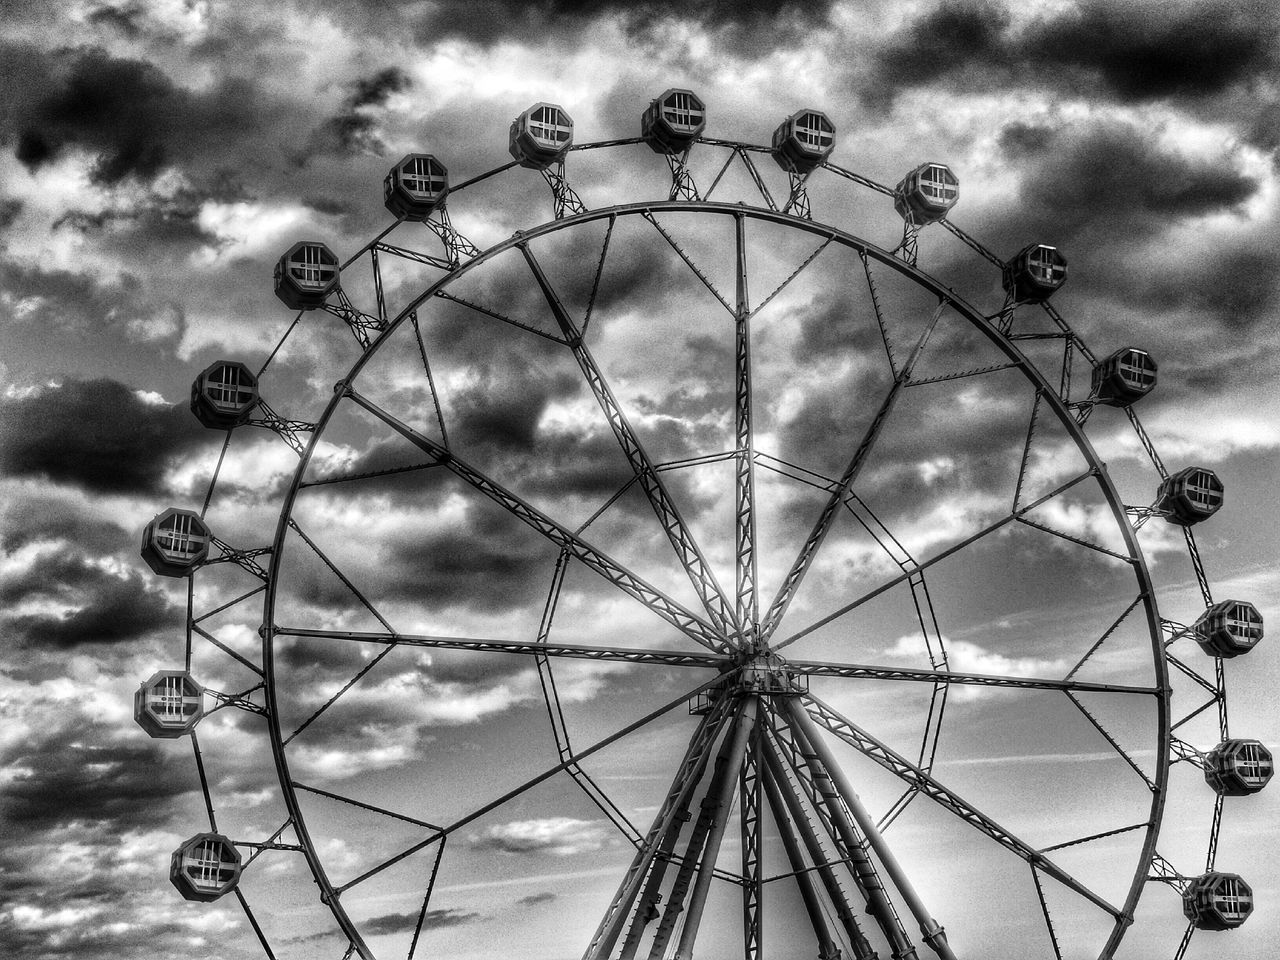 low angle view, sky, amusement park, cloud - sky, amusement park ride, ferris wheel, arts culture and entertainment, cloudy, cloud, weather, built structure, fun, day, overcast, metal, outdoors, enjoyment, no people, dusk, silhouette